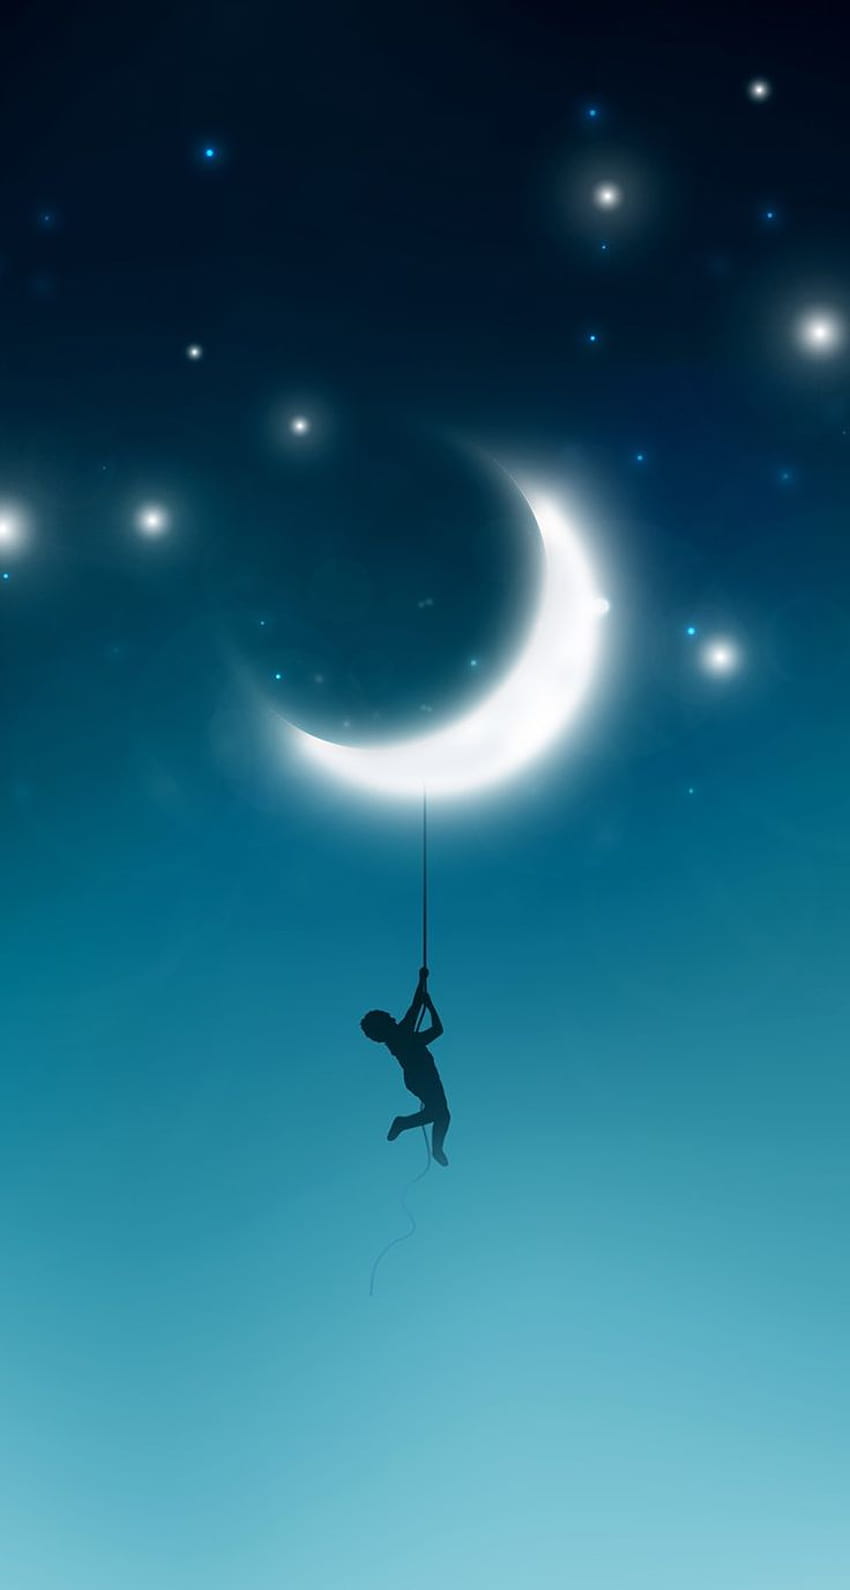 TAP DAN DAPATKAN APLIKASI! Seni Bulan Bintang Malam Dongeng Kreatif Kilauan Biru Langit Terang… wallpaper ponsel HD